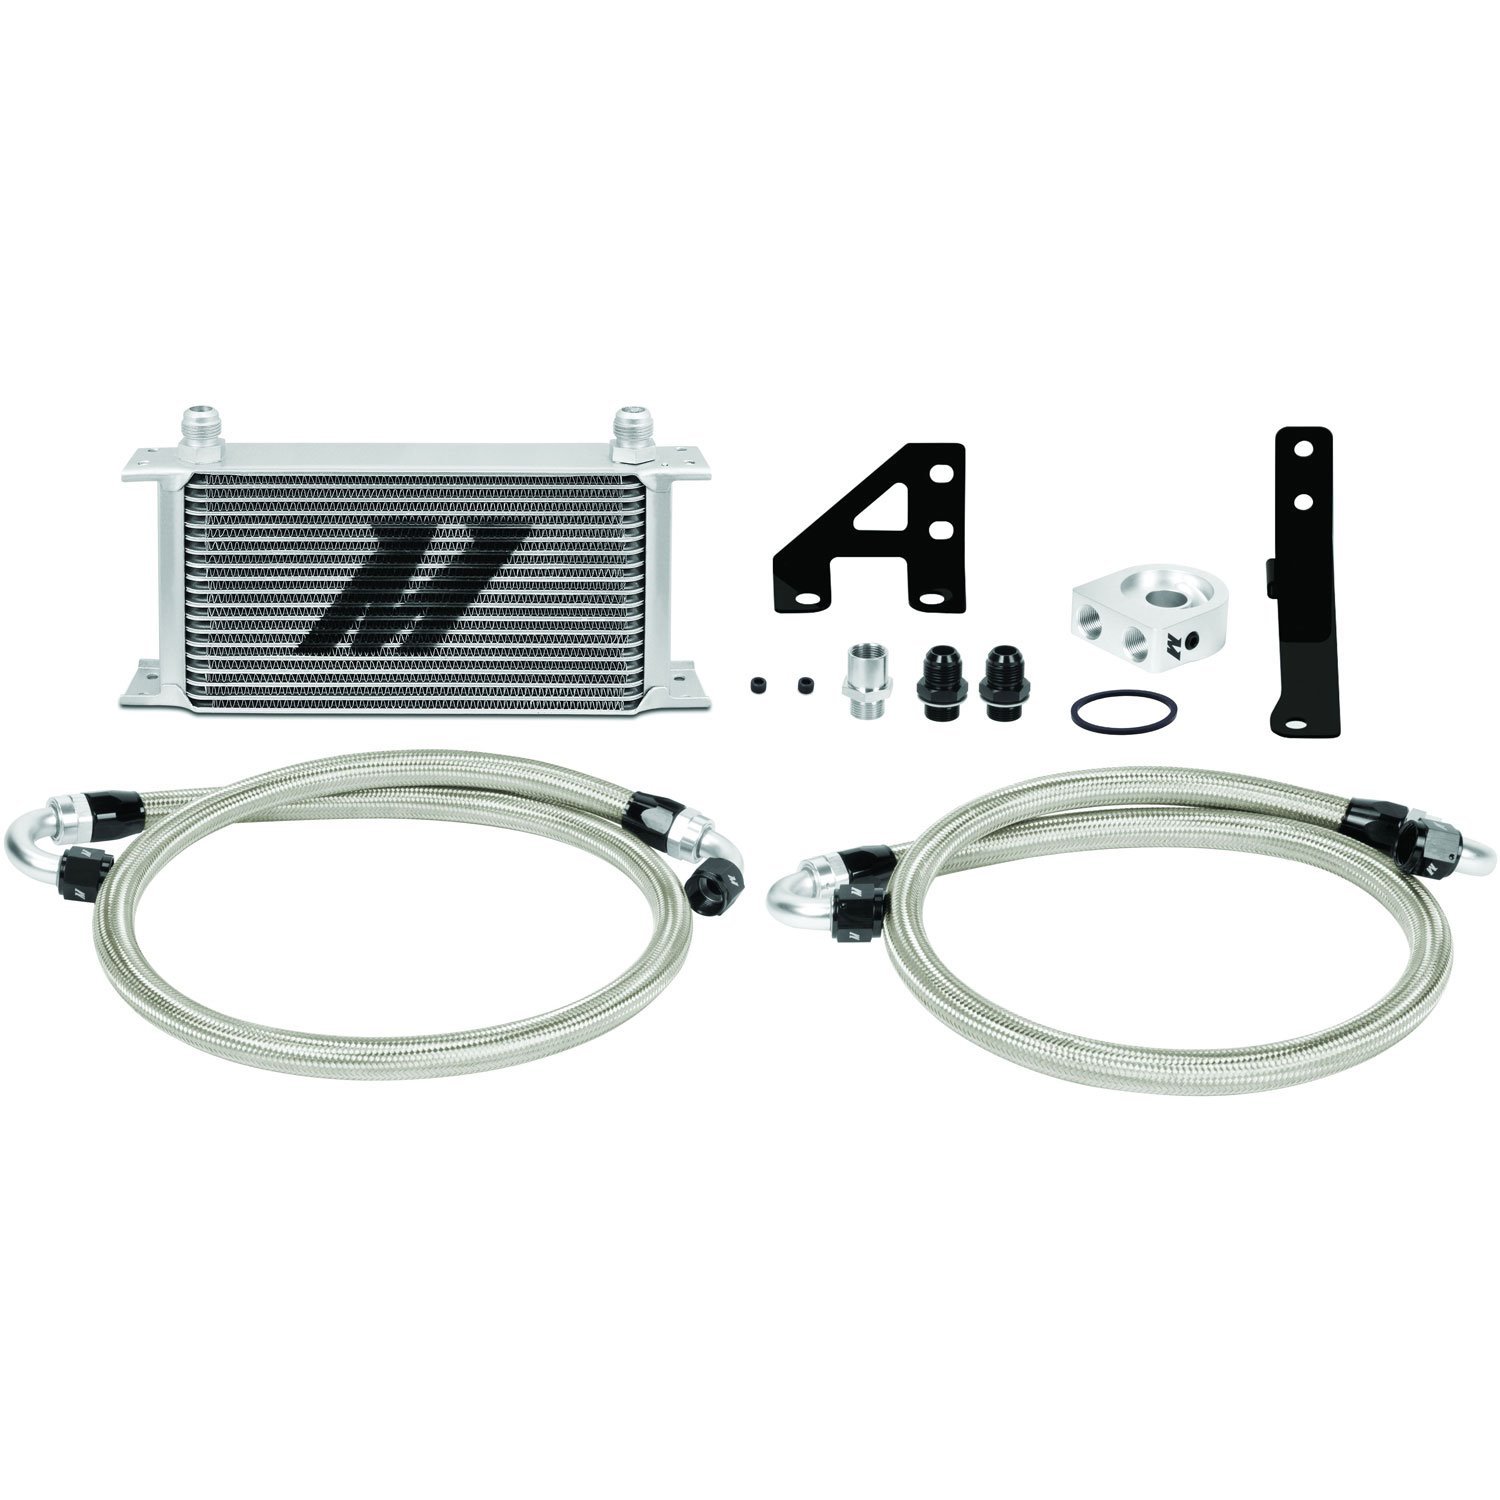 Subaru WRX STI Oil Cooler Kit - MFG Part No. MMOC-STI-15